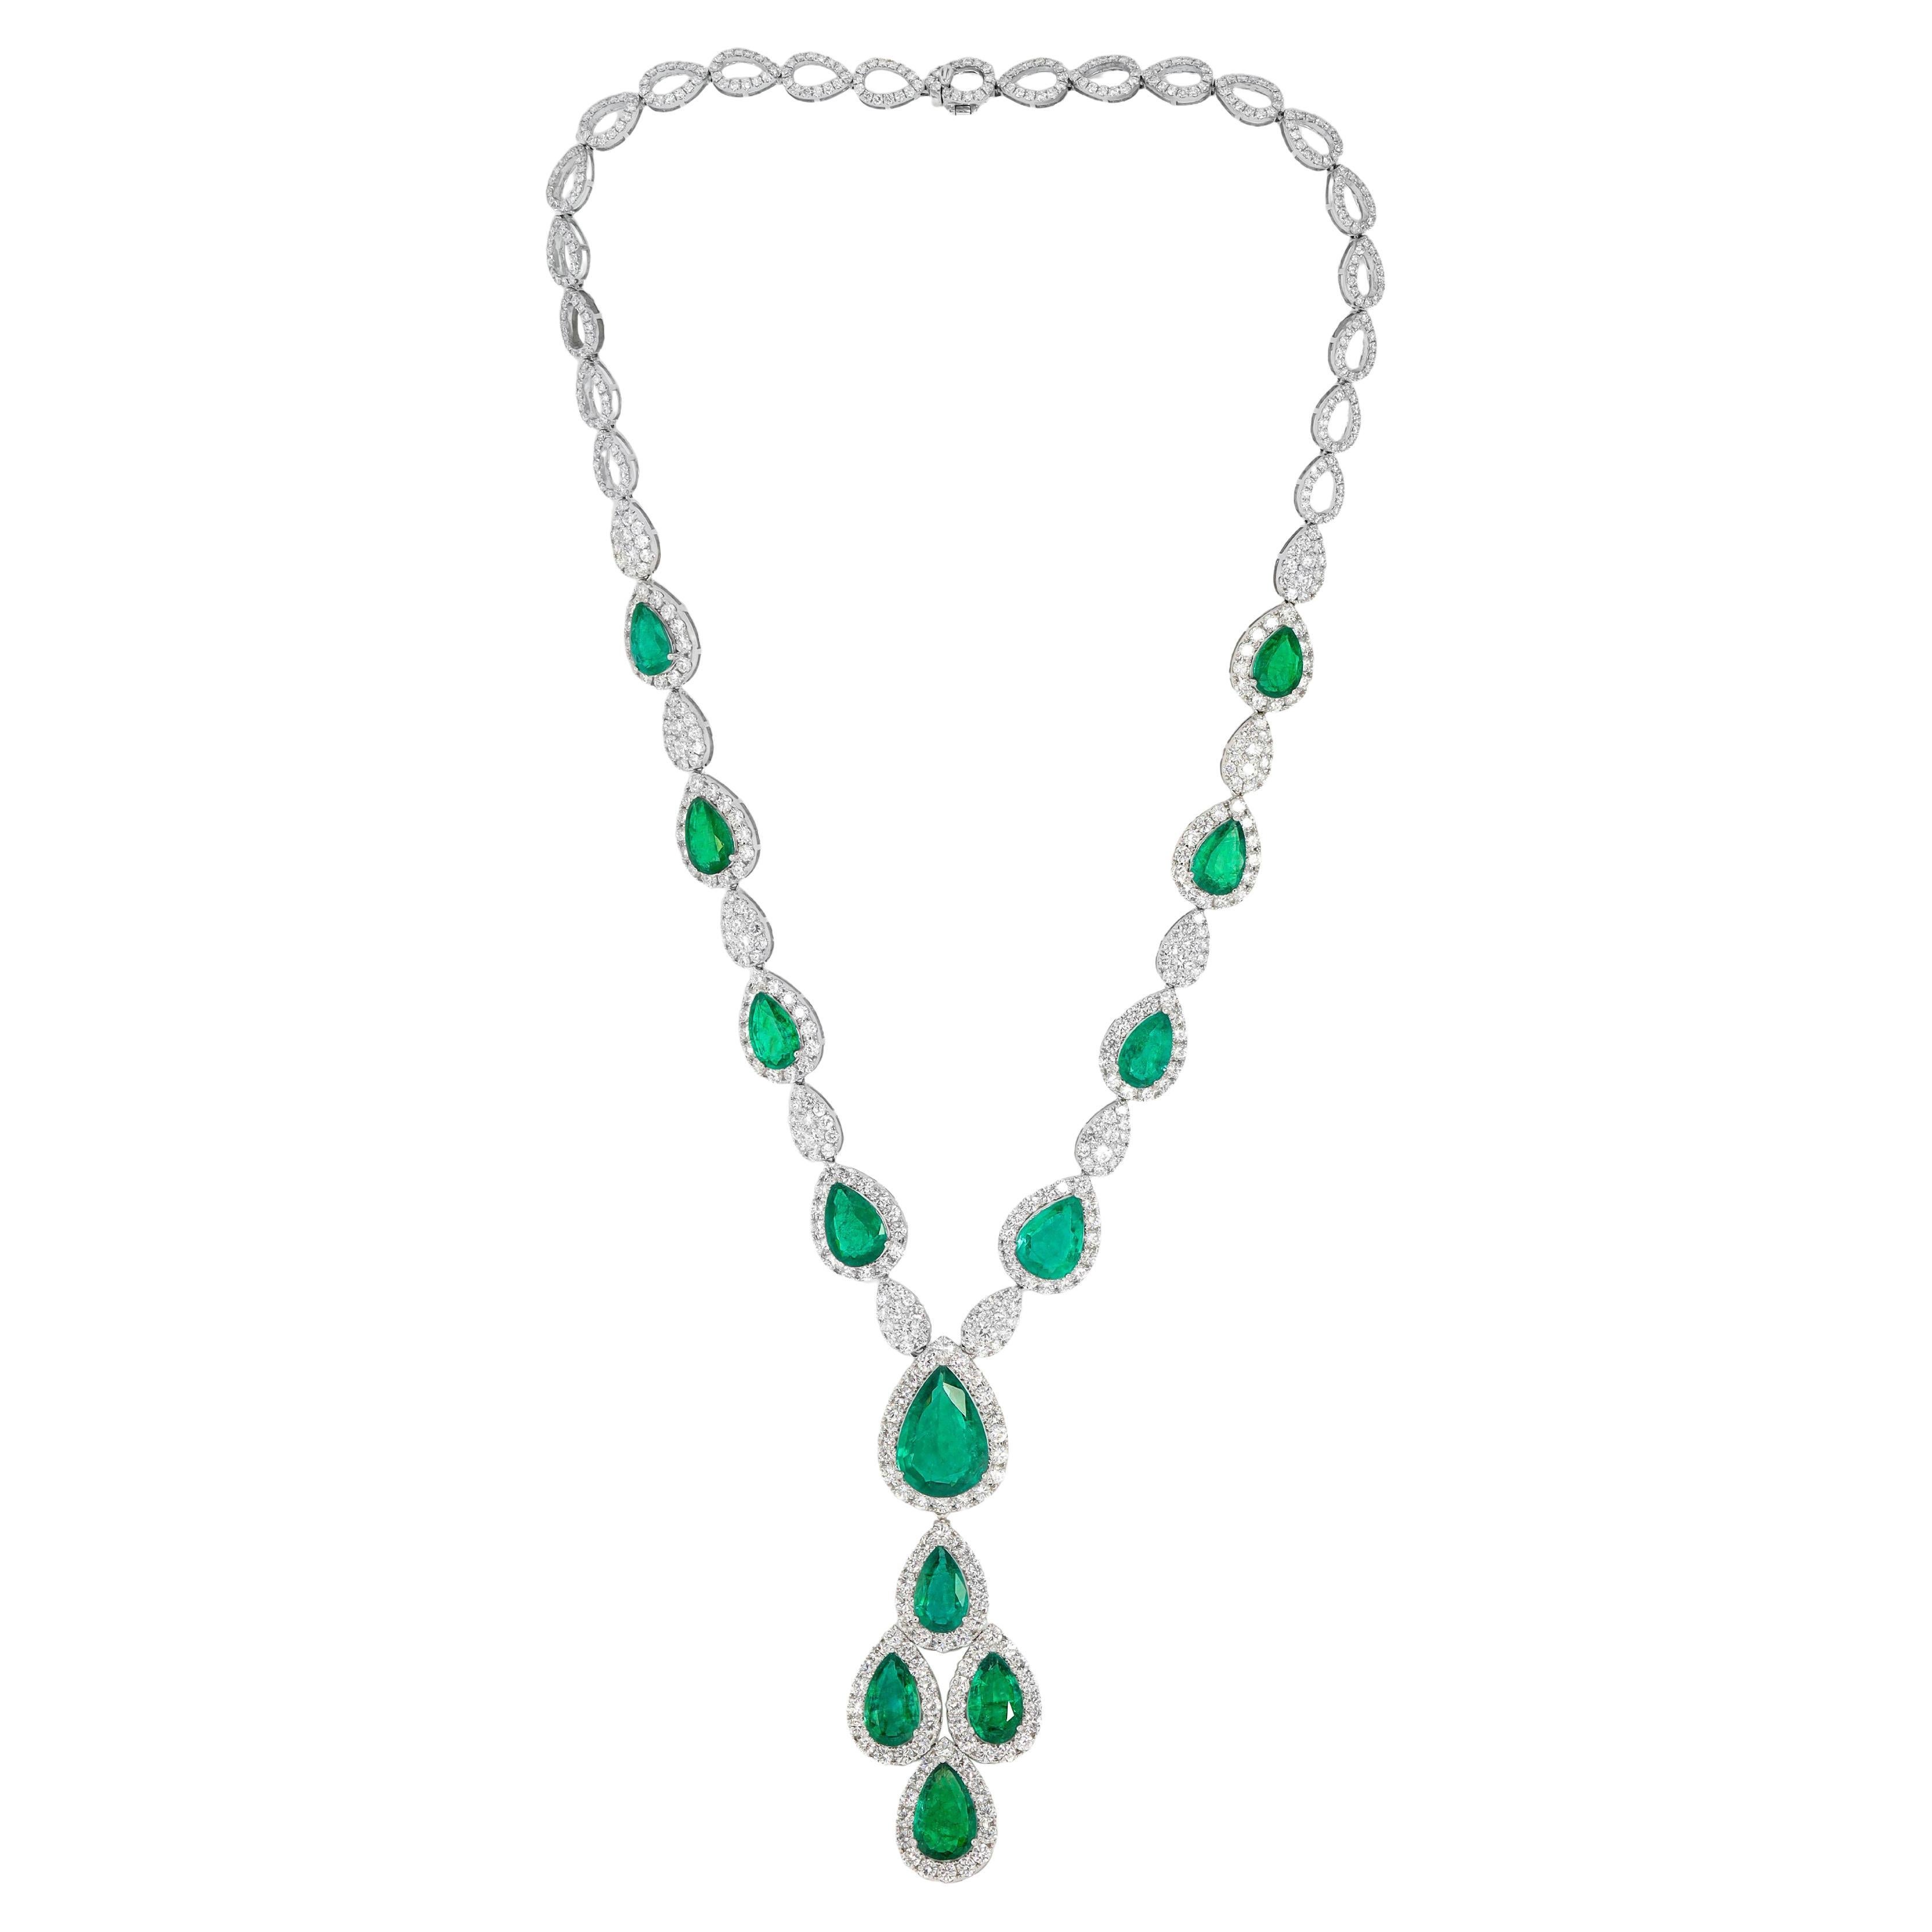 Diana M. Certified 32.19 Carat Emerald and Diamond Drop Necklace For Sale